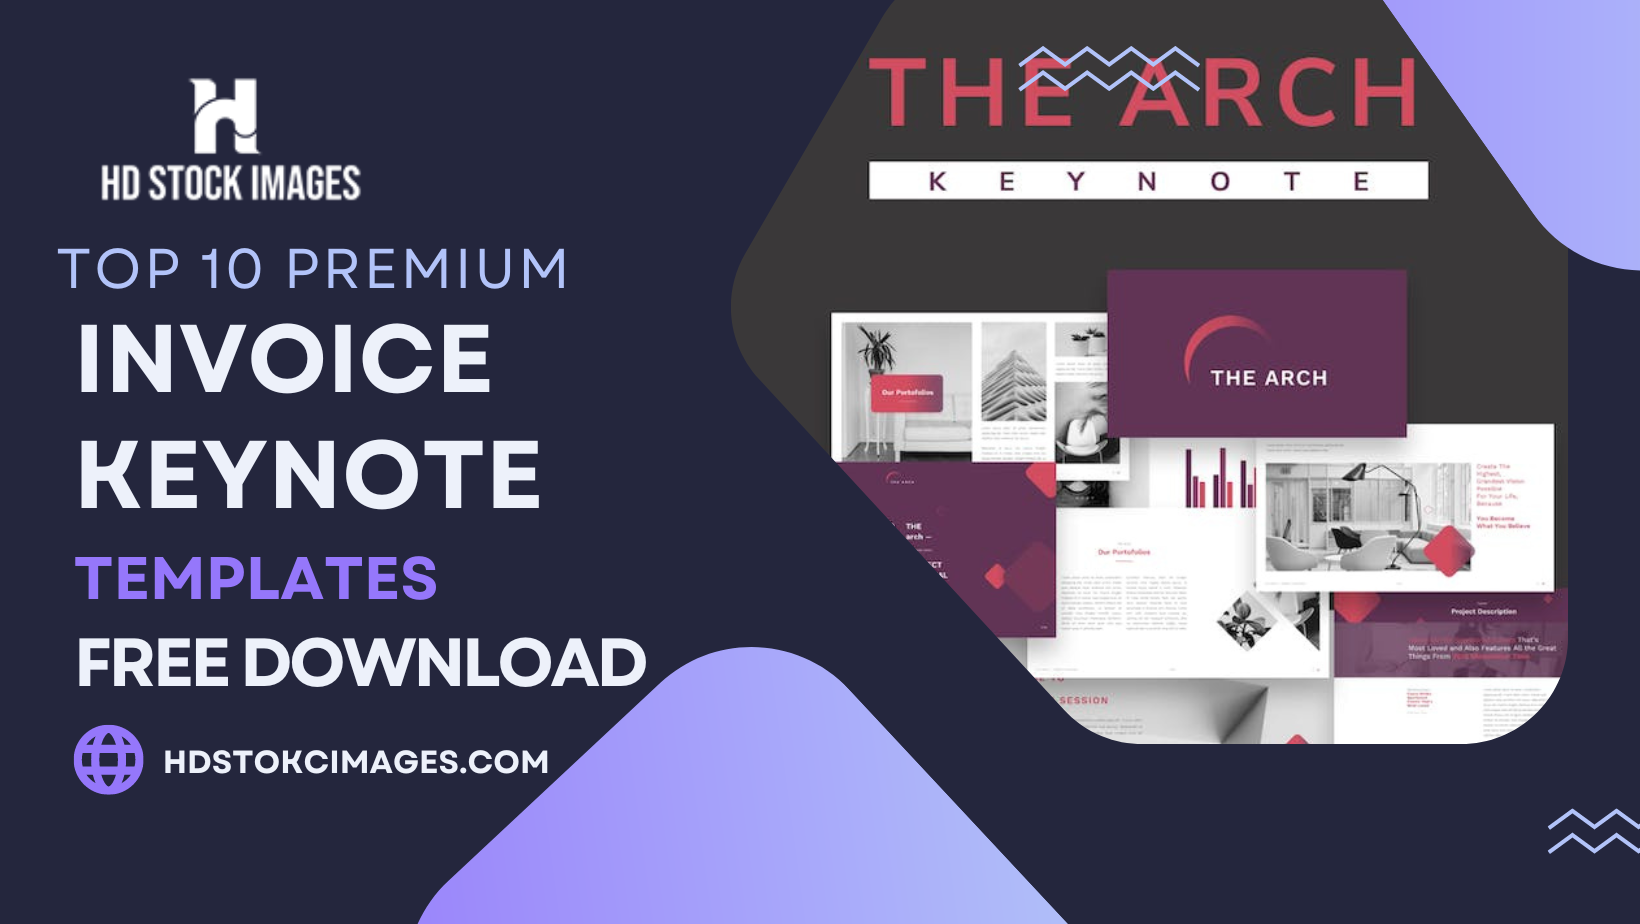 Top 10 Premium Invoice Keynote Templates Free Download